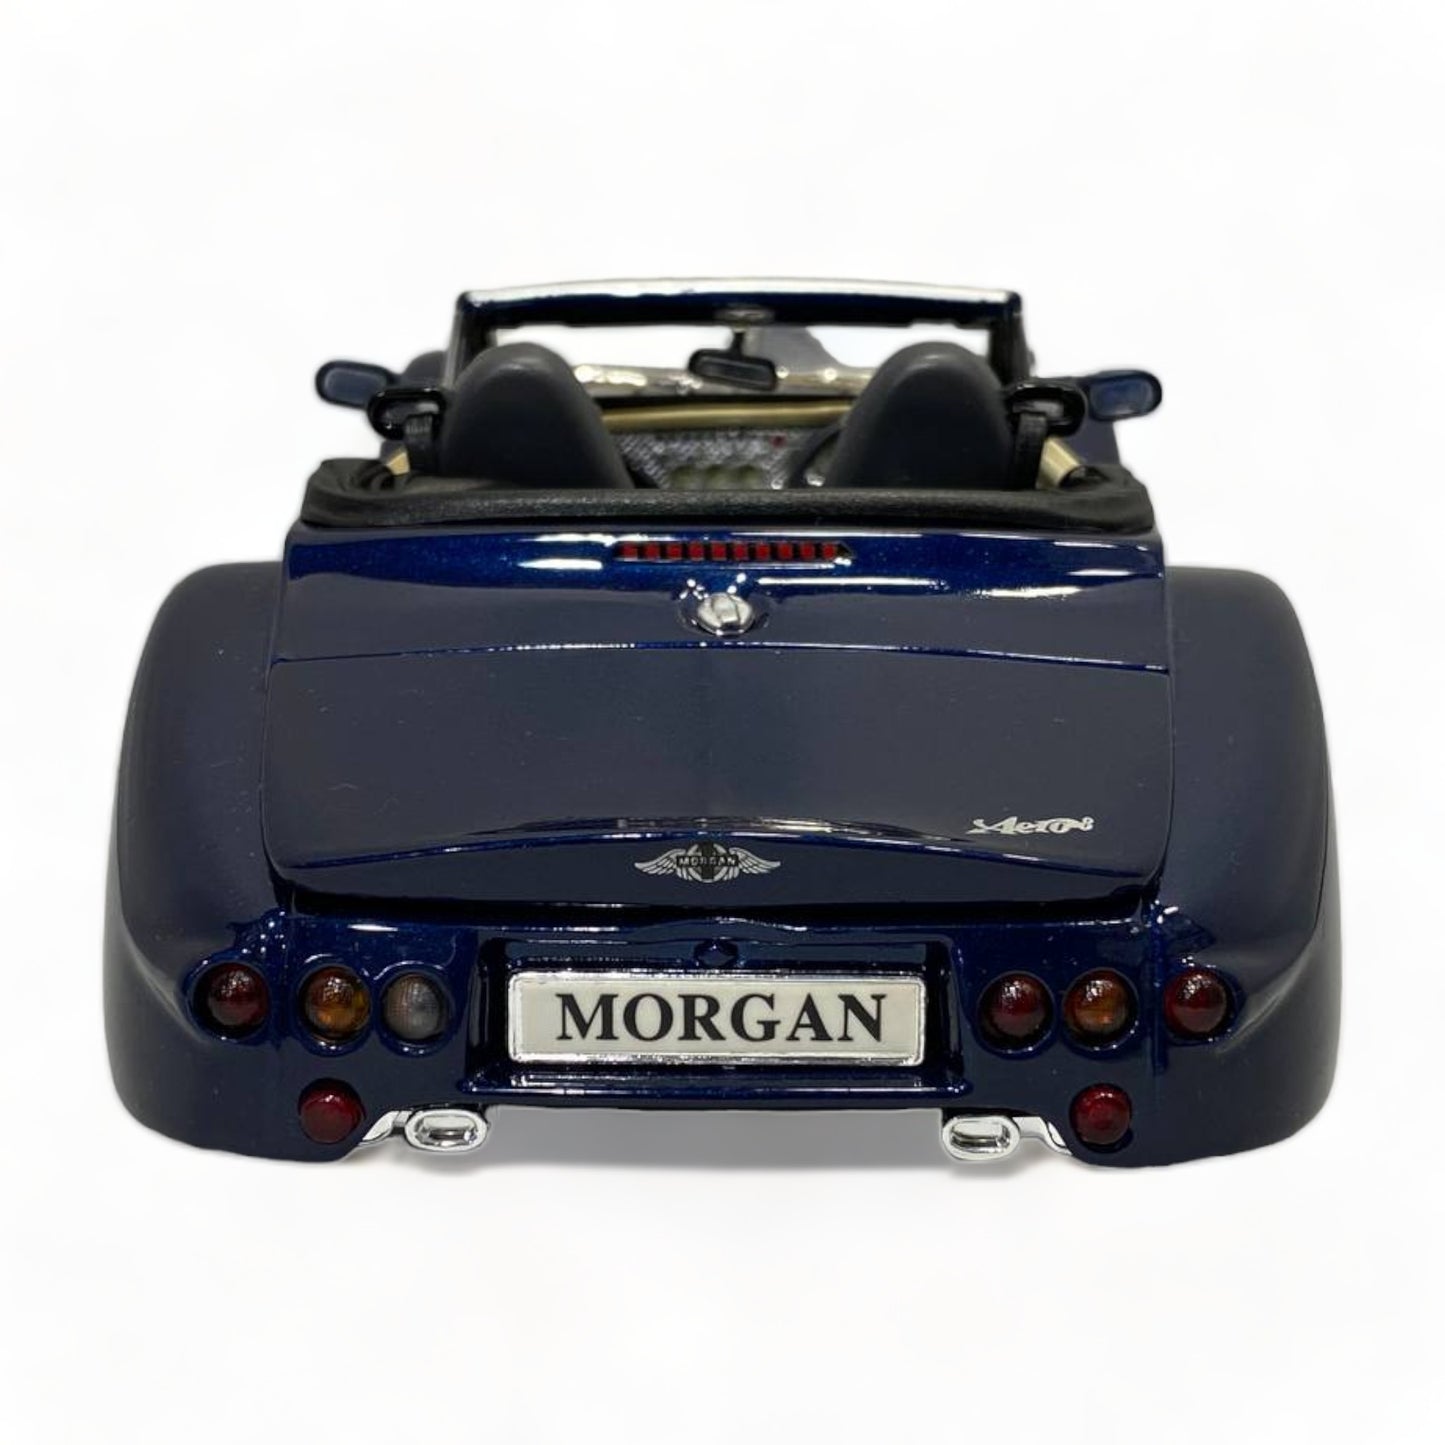 1/18 Diecast MORGAN AERO 8  BLUE Bburago Scale Model Car|Sold in Dturman.com Dubai UAE.